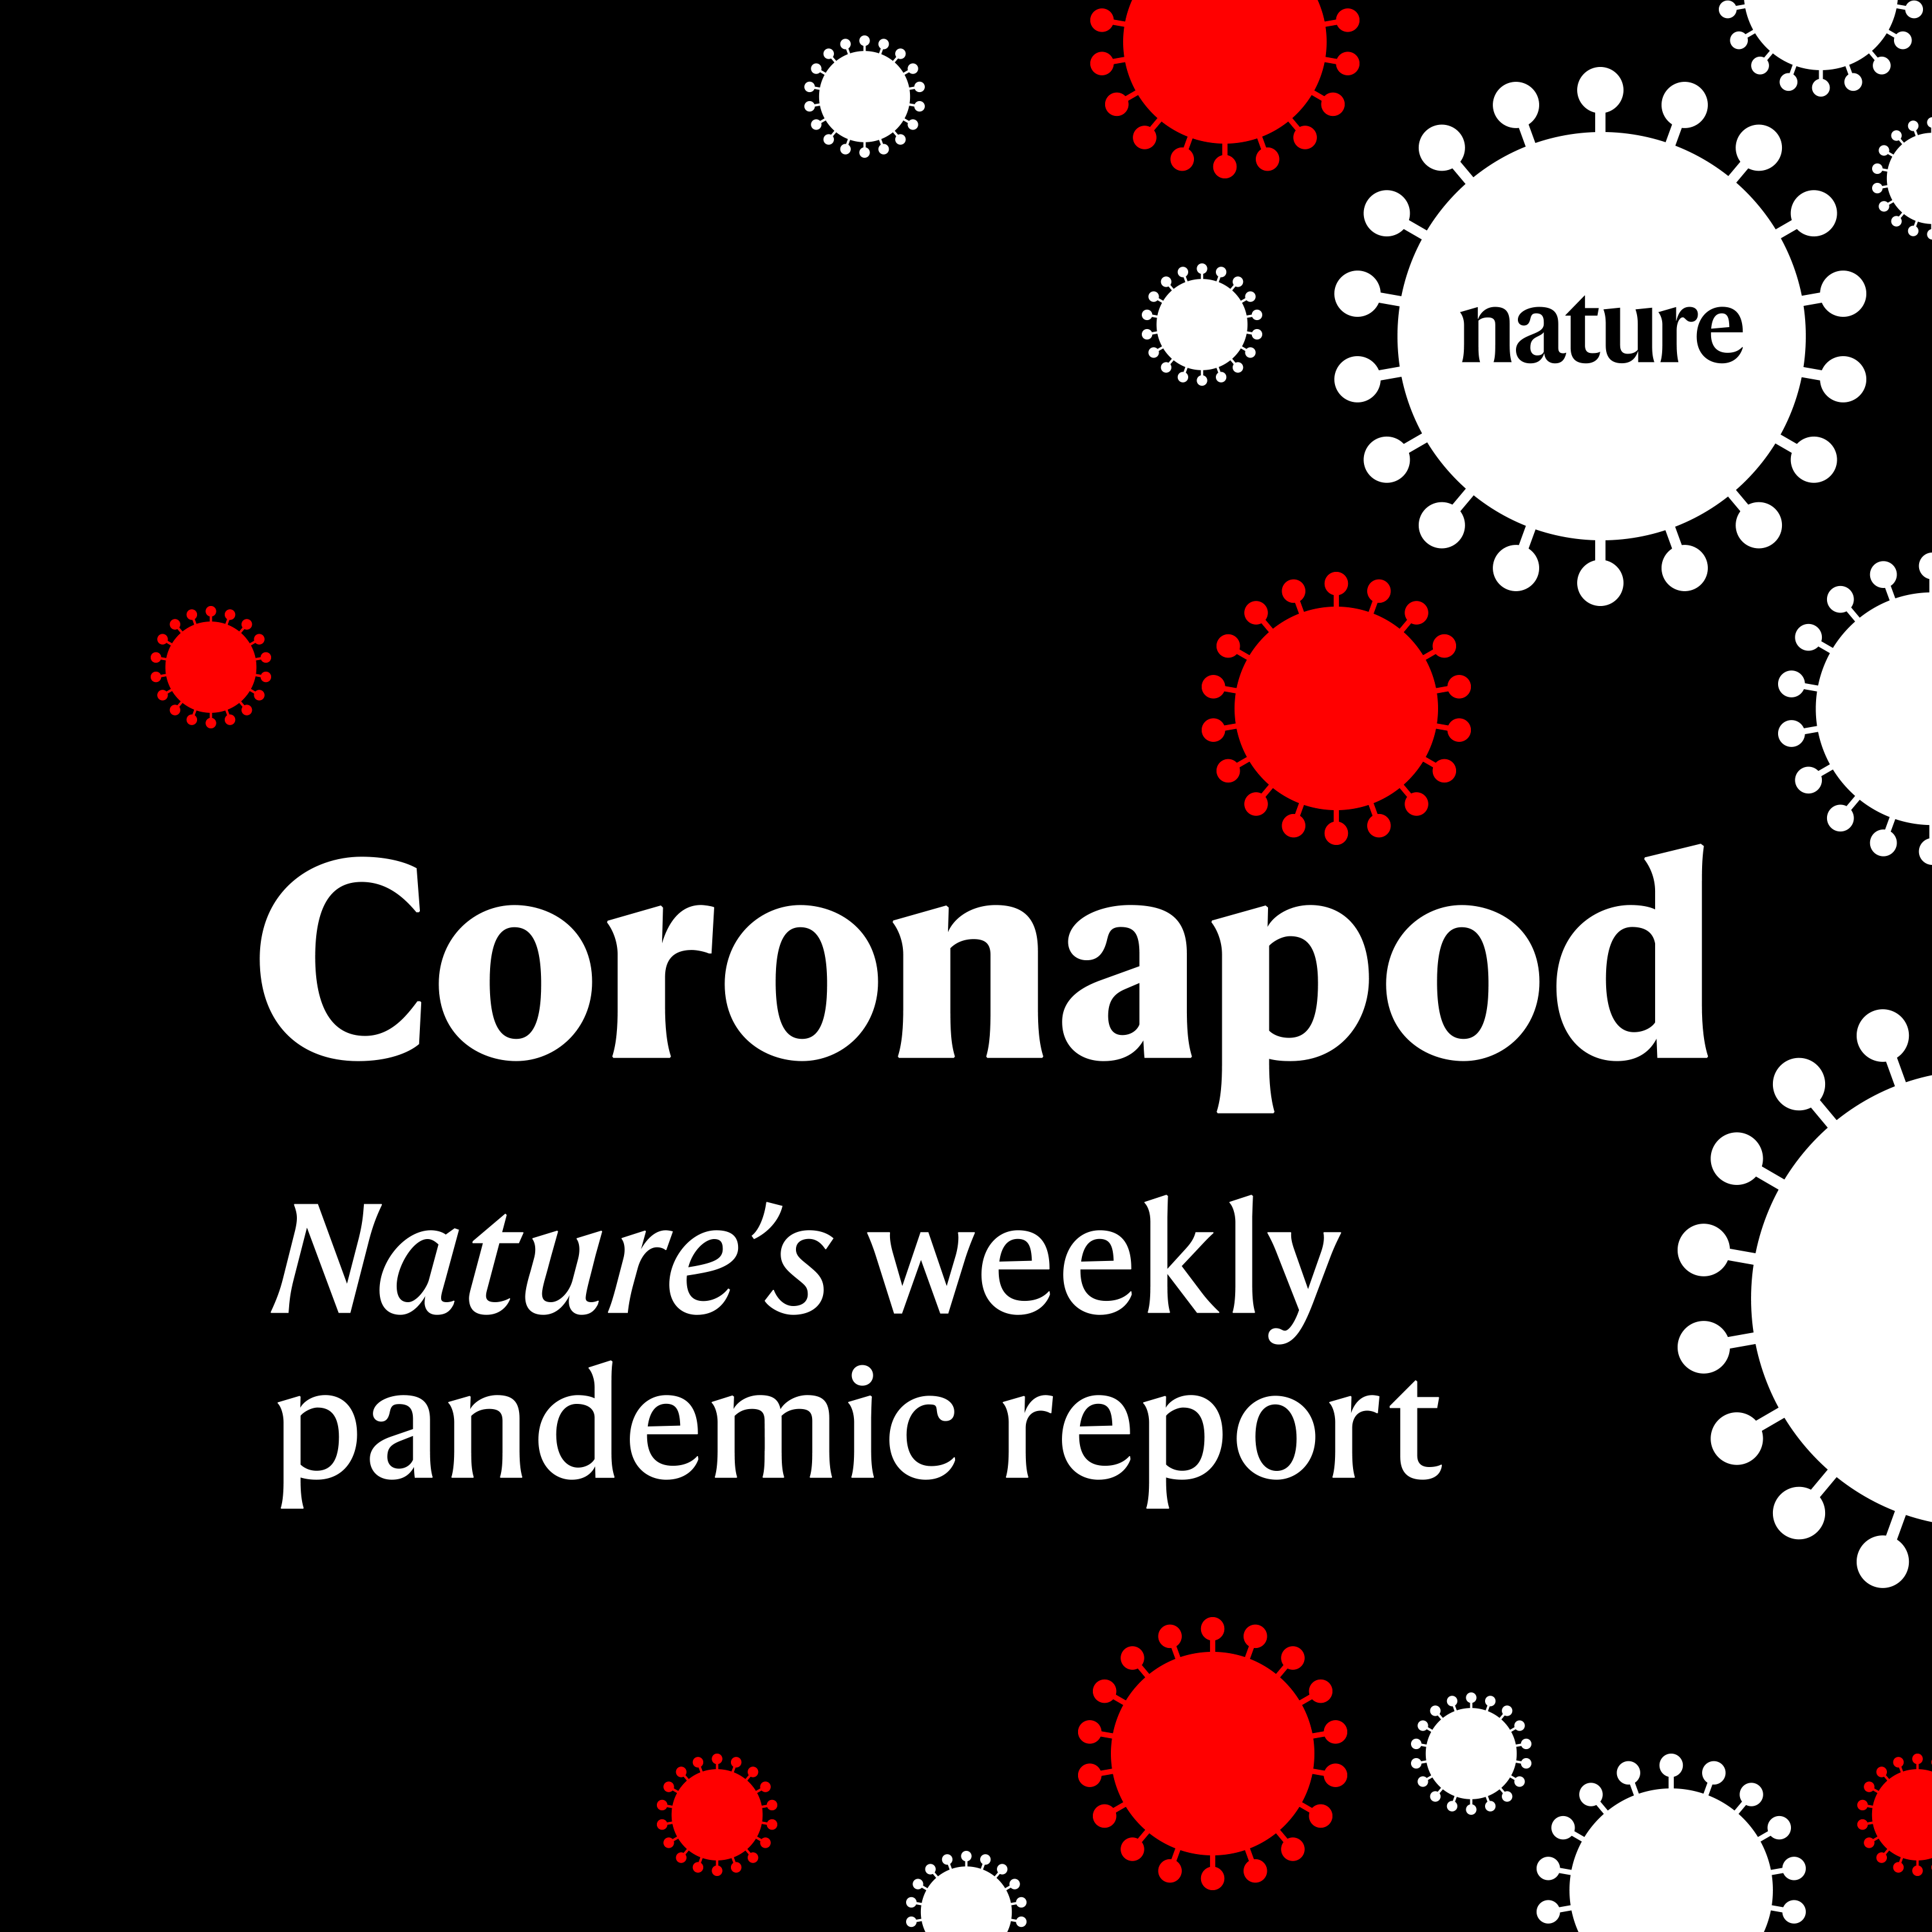 Coronapod: the Oxford-AstraZeneca COVID vaccine - what you need to know